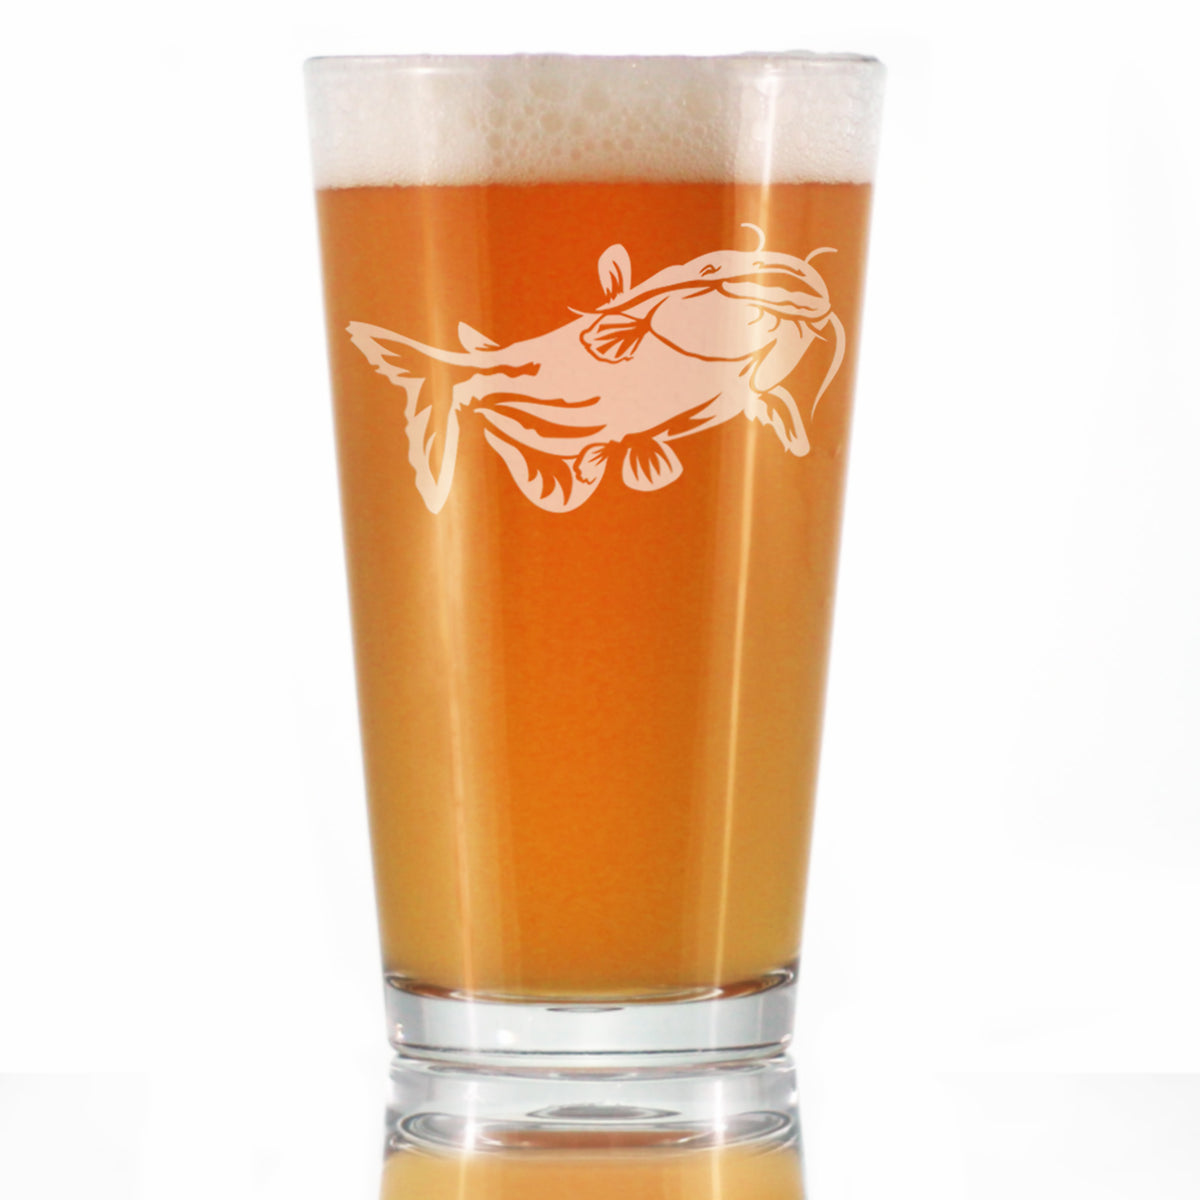 Catfish - Pint Glass for Beer - Catfishing Gifts for Fisherman - Fun Fish Cups - Fishing Decor - 16 oz